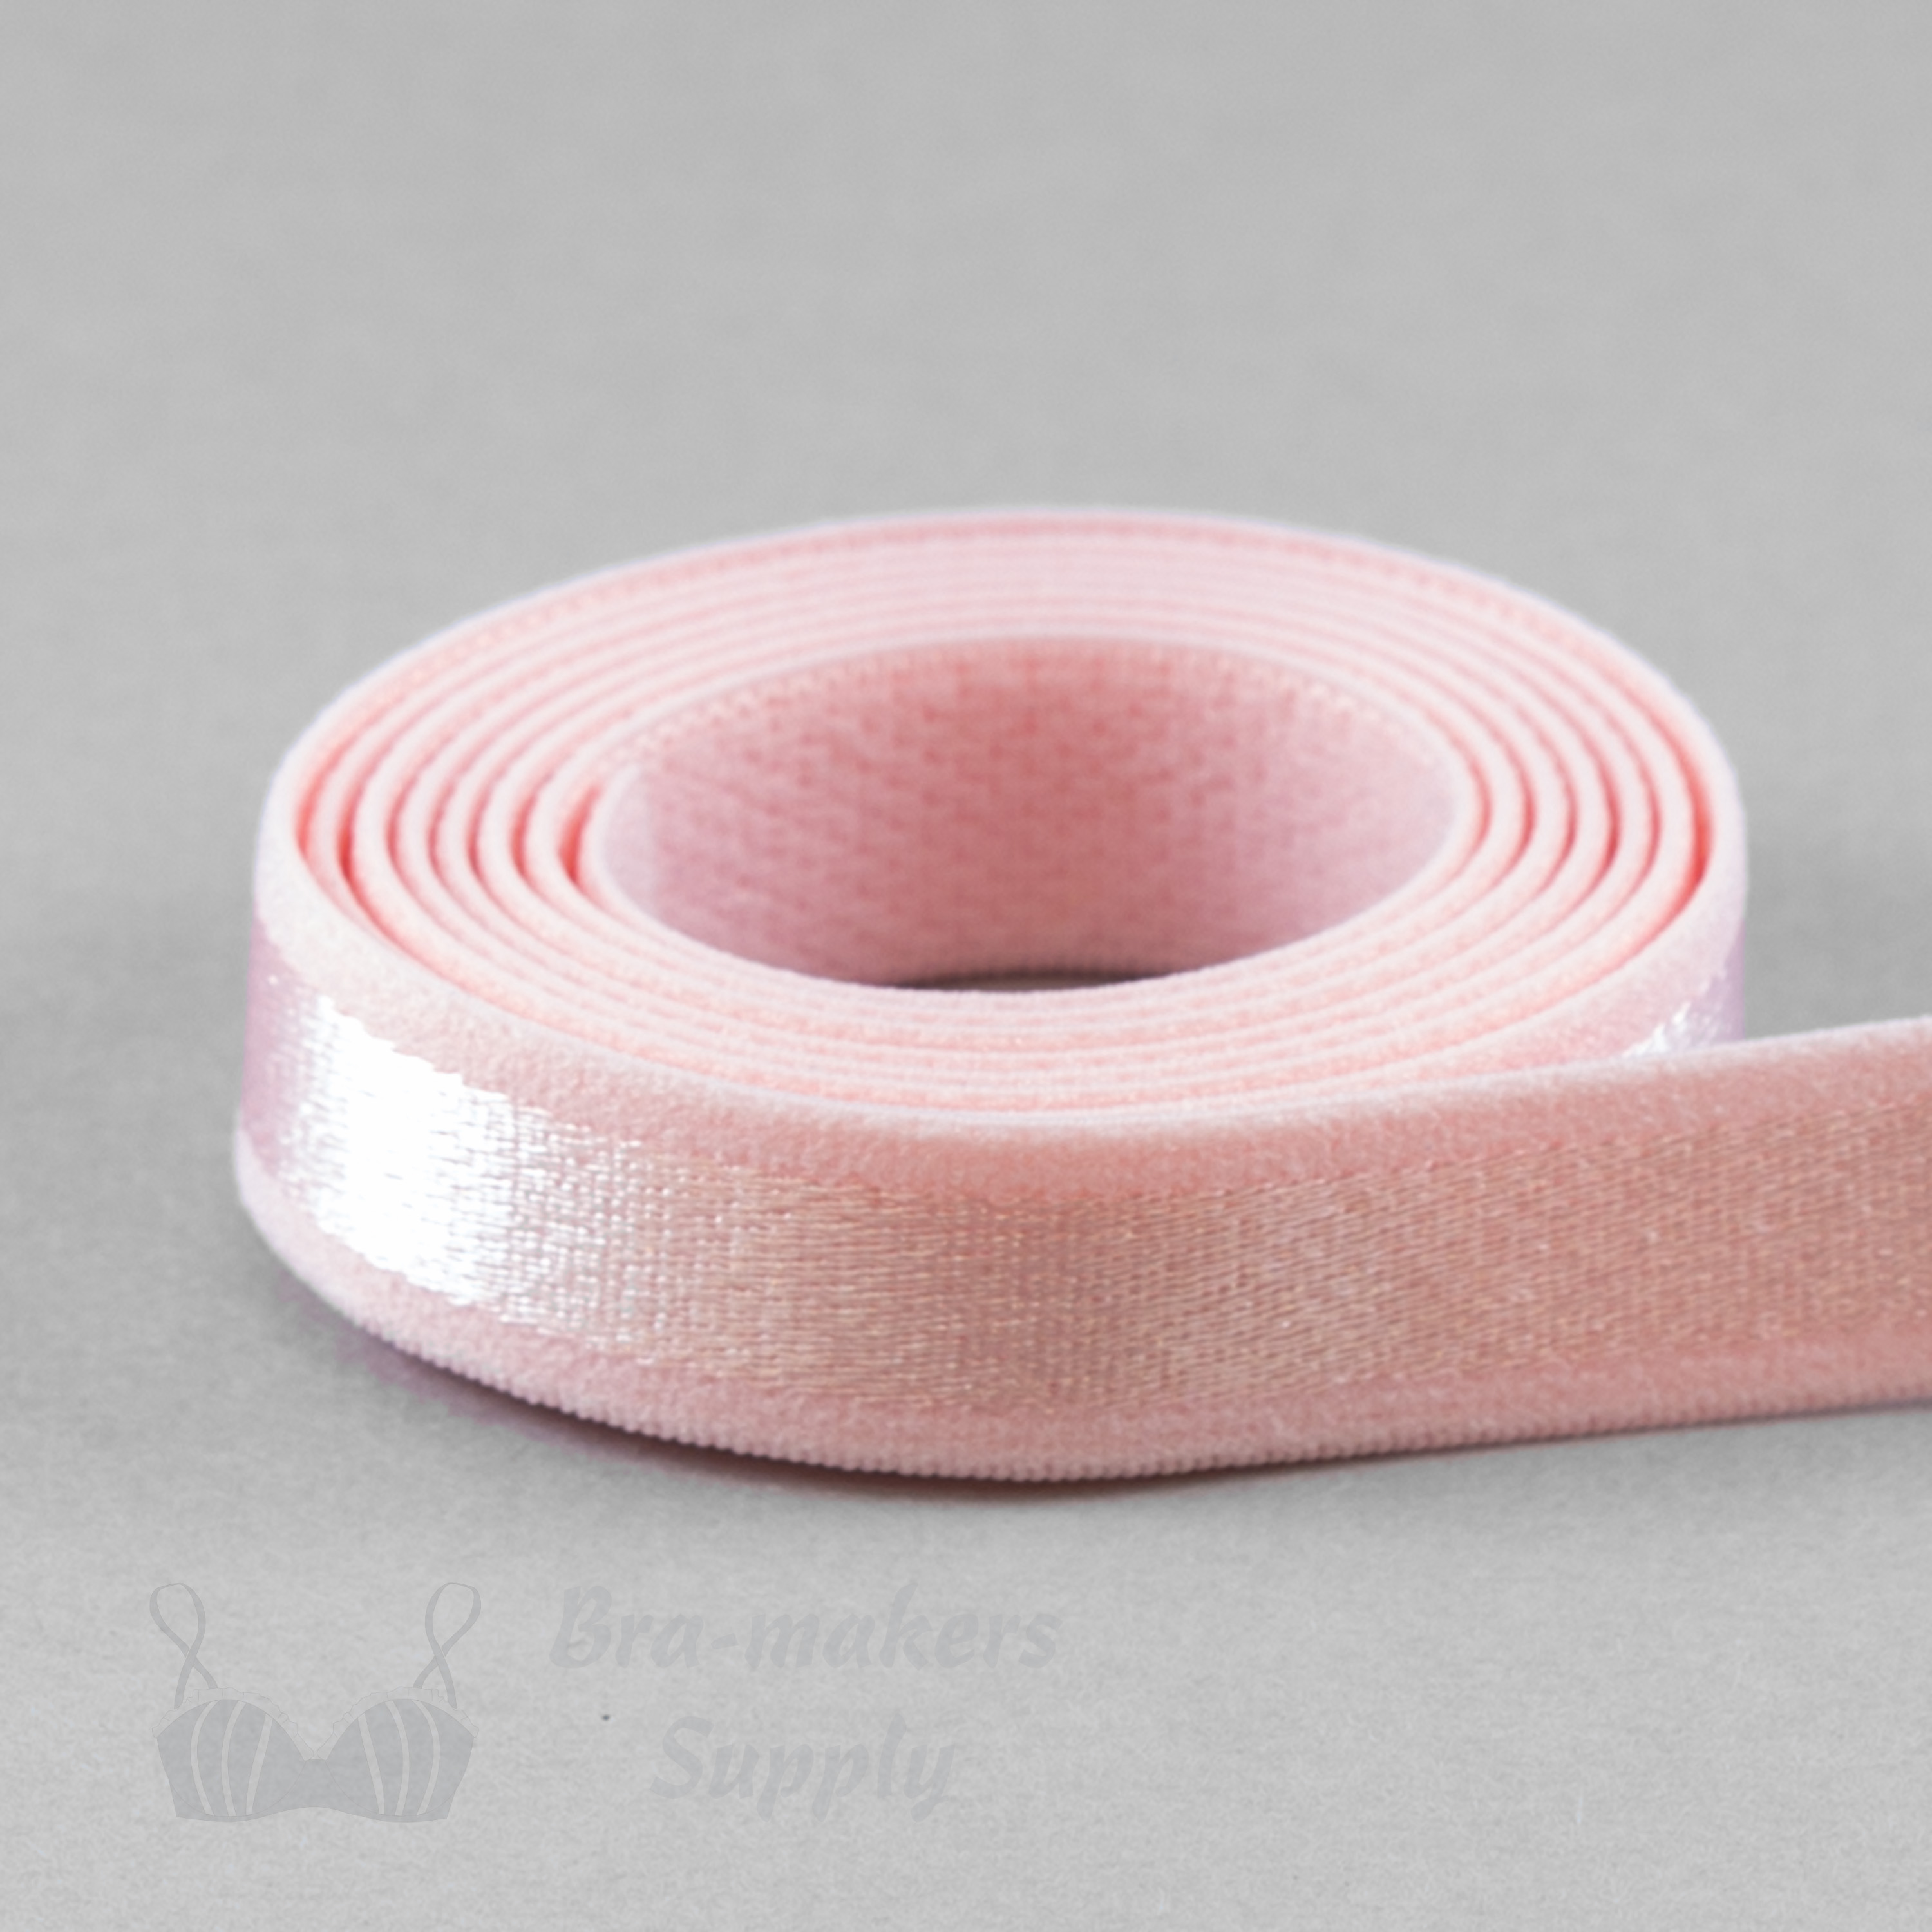 https://www.braandcorsetsupplies.com/wp-content/uploads/2016/07/half-inch-satin-stripe-strap-elastic-or-12-mm-bra-strap-elastic-ES-44-pink-from-Bra-Makers-Supply-1-metre-roll-shown.jpg